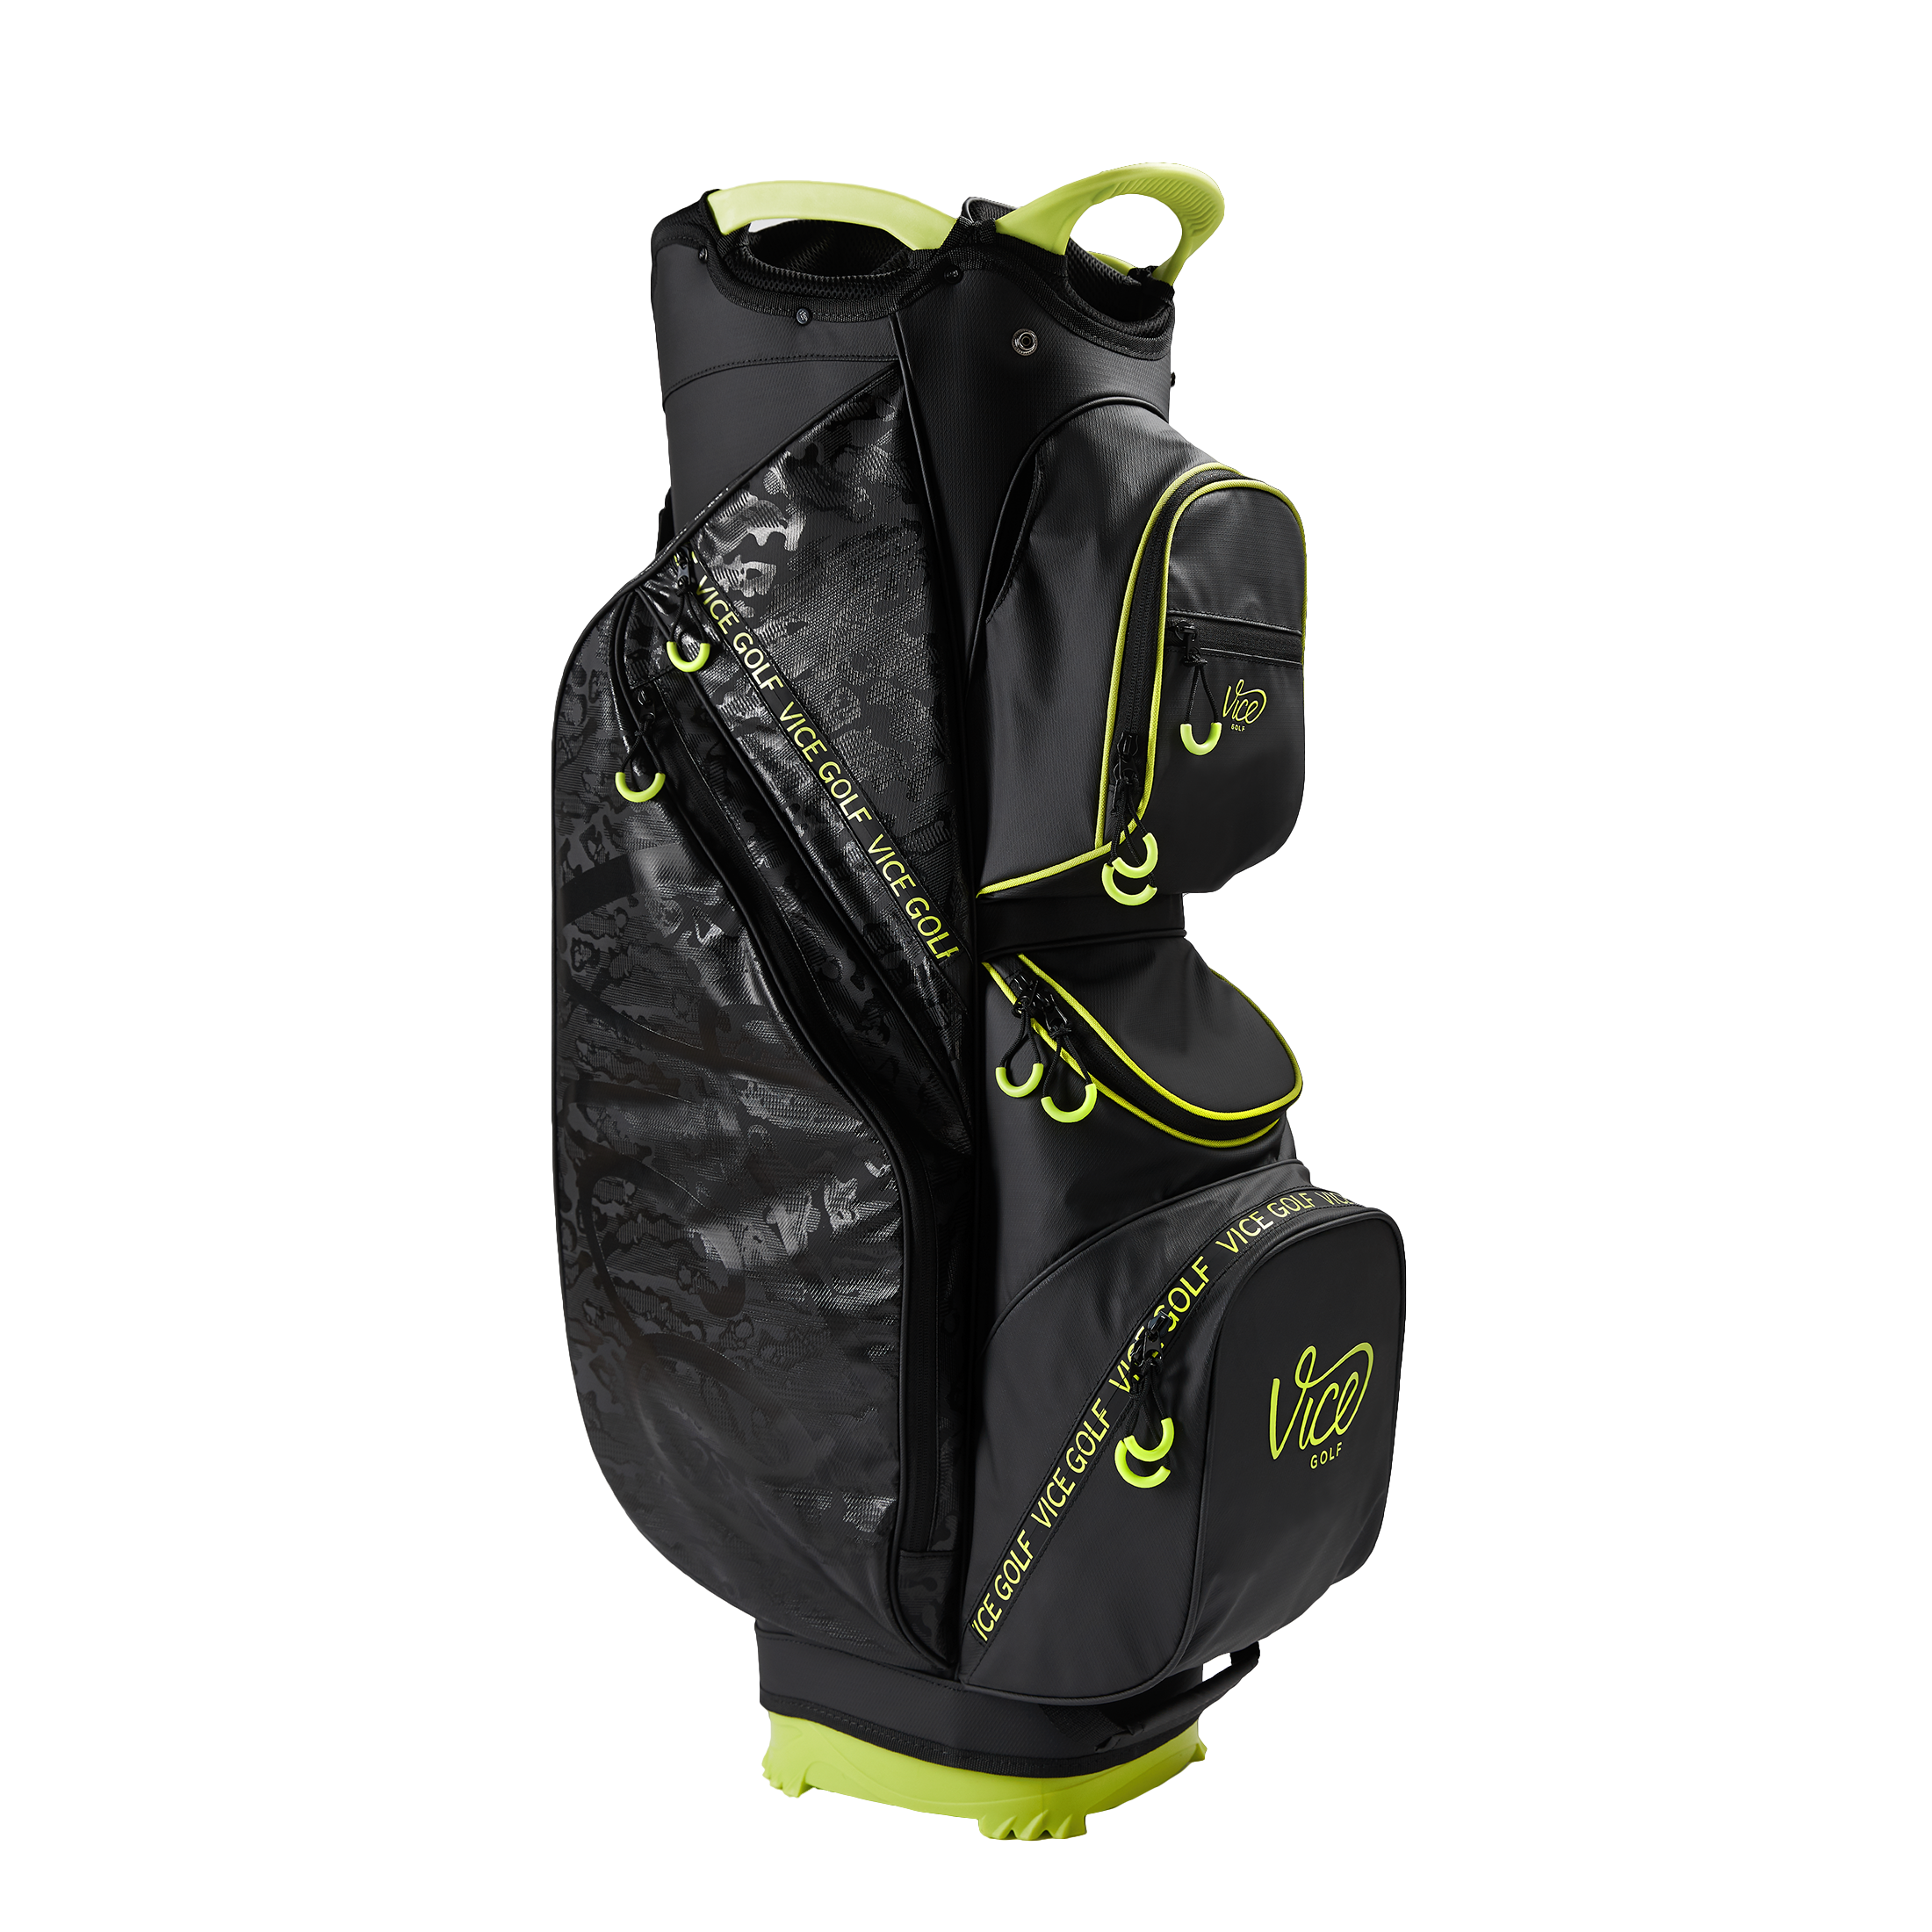 Vice Golf Cruiser Cart Golf Bag, Black/Lime, 15 Way Divider - image 1 of 8